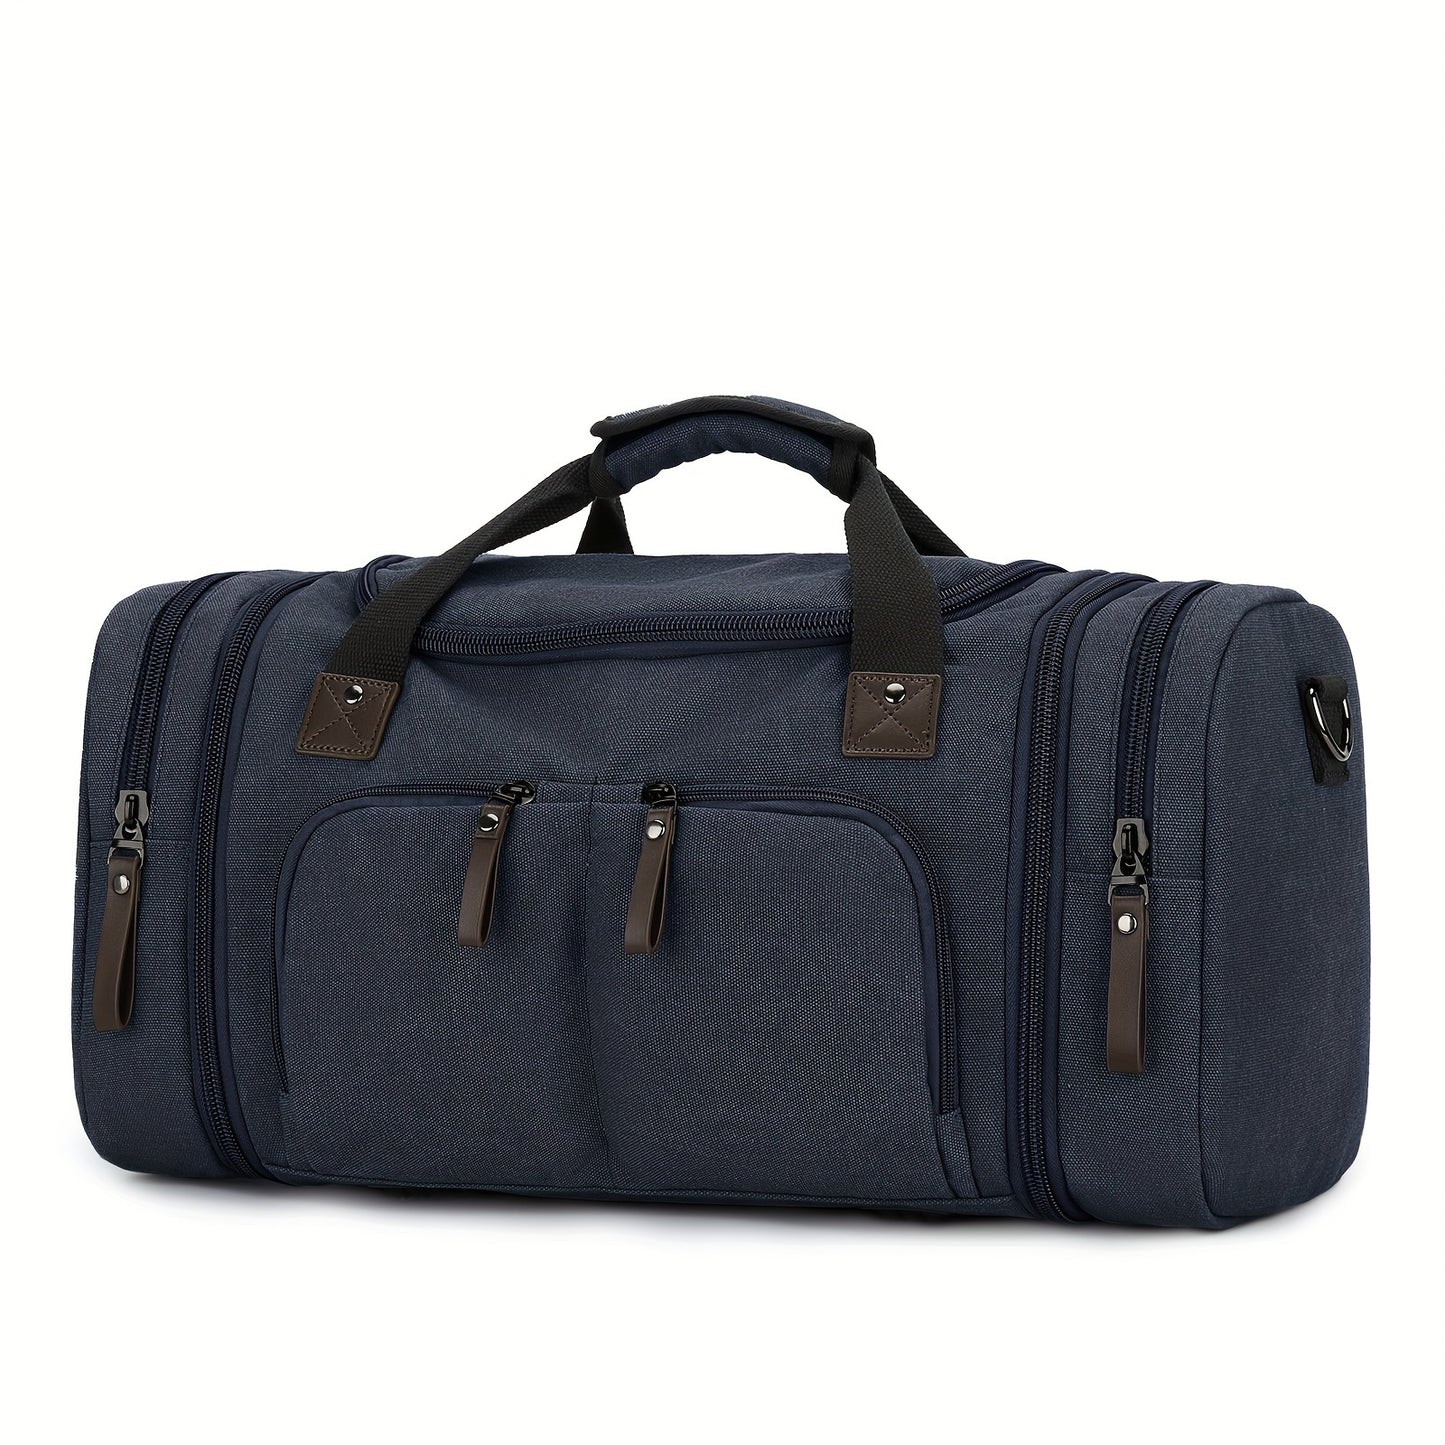 1pc Canvas Travel And Business Trip Luggage Bag, 13.21gal Expandable Luggage Bag, Storage Handbag